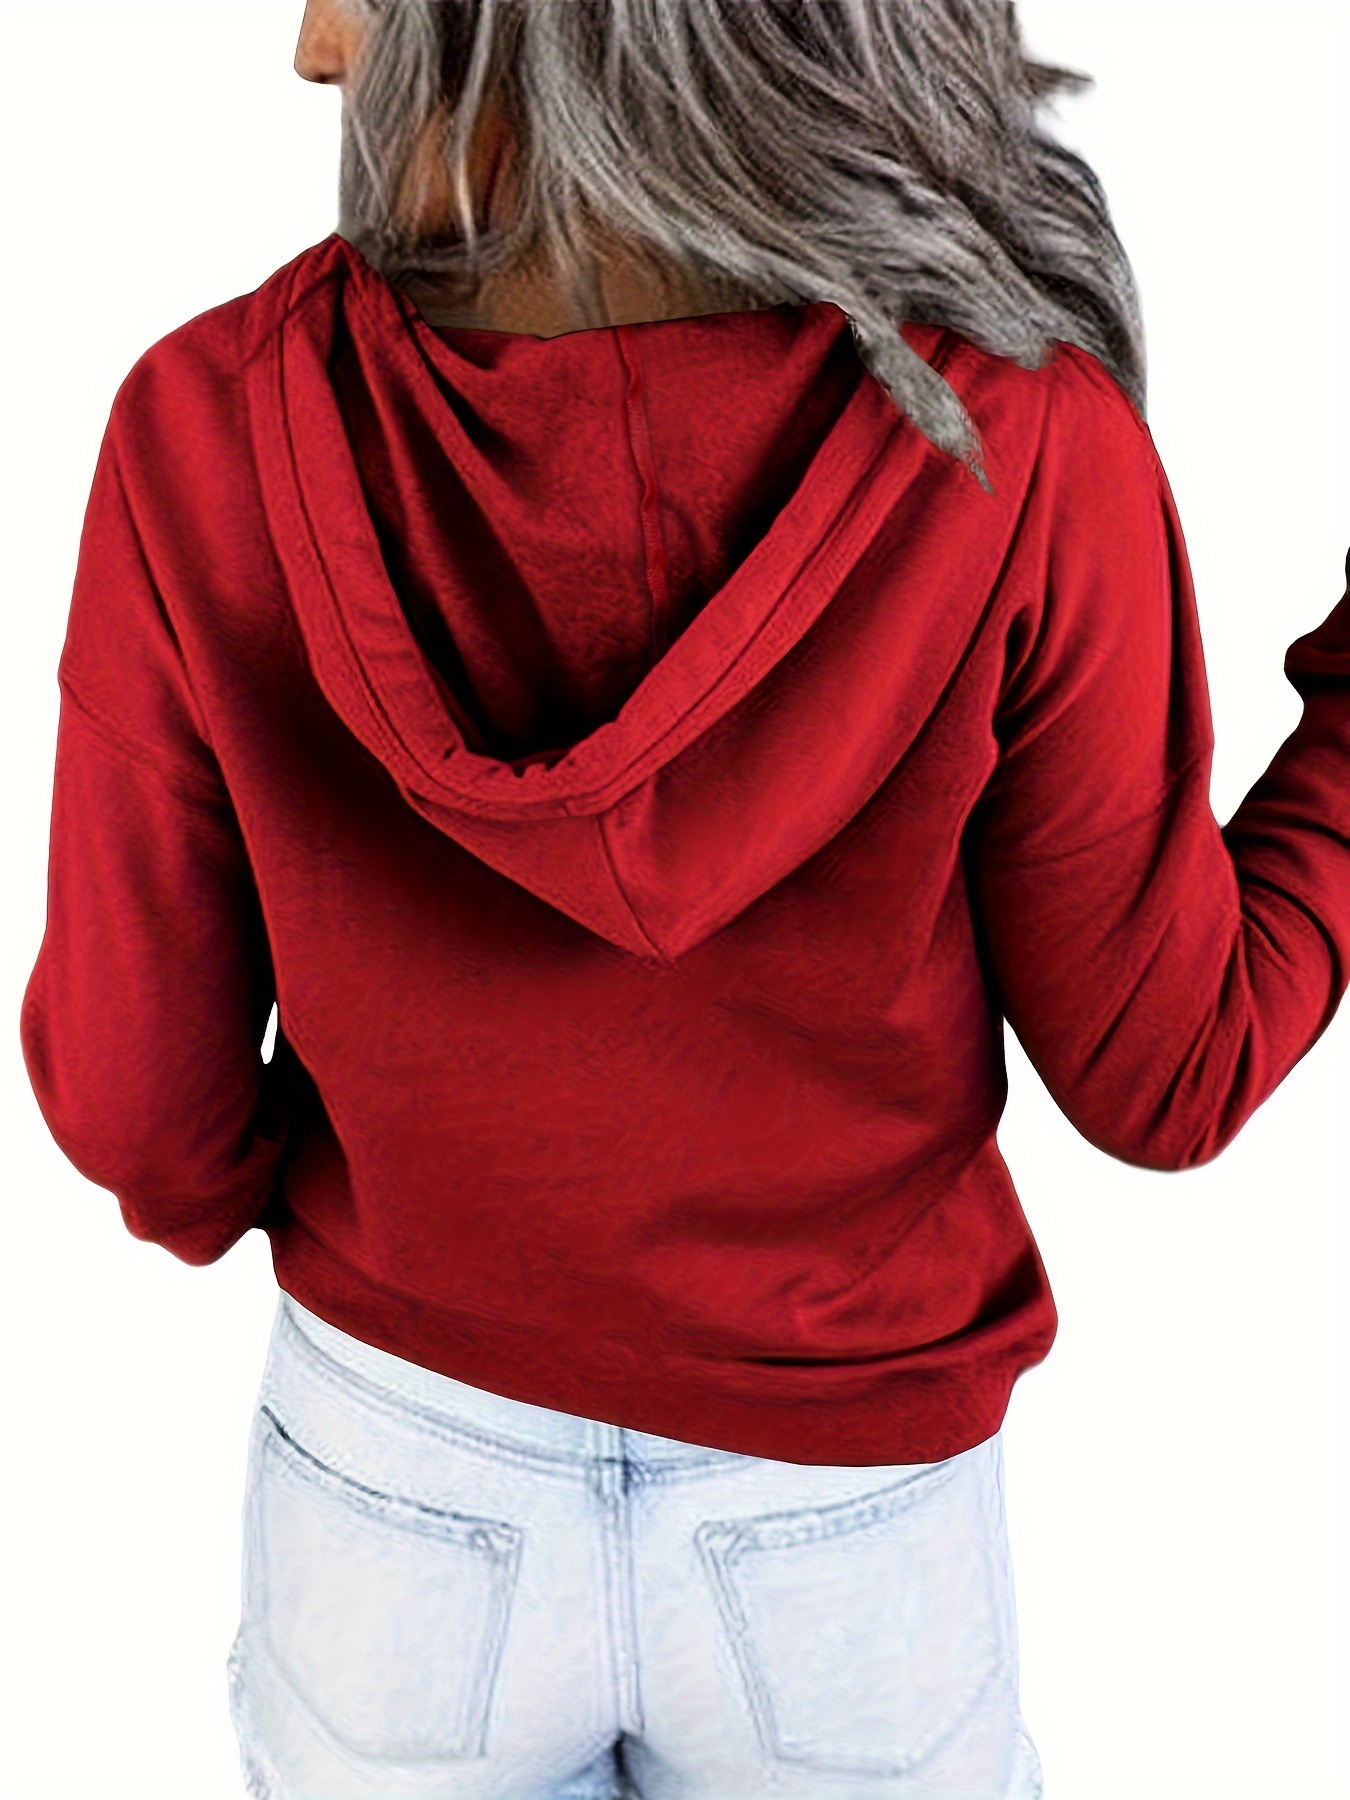 Zip Up Hoodie Women Sweetshirts Oversize Red Hoody Fashion